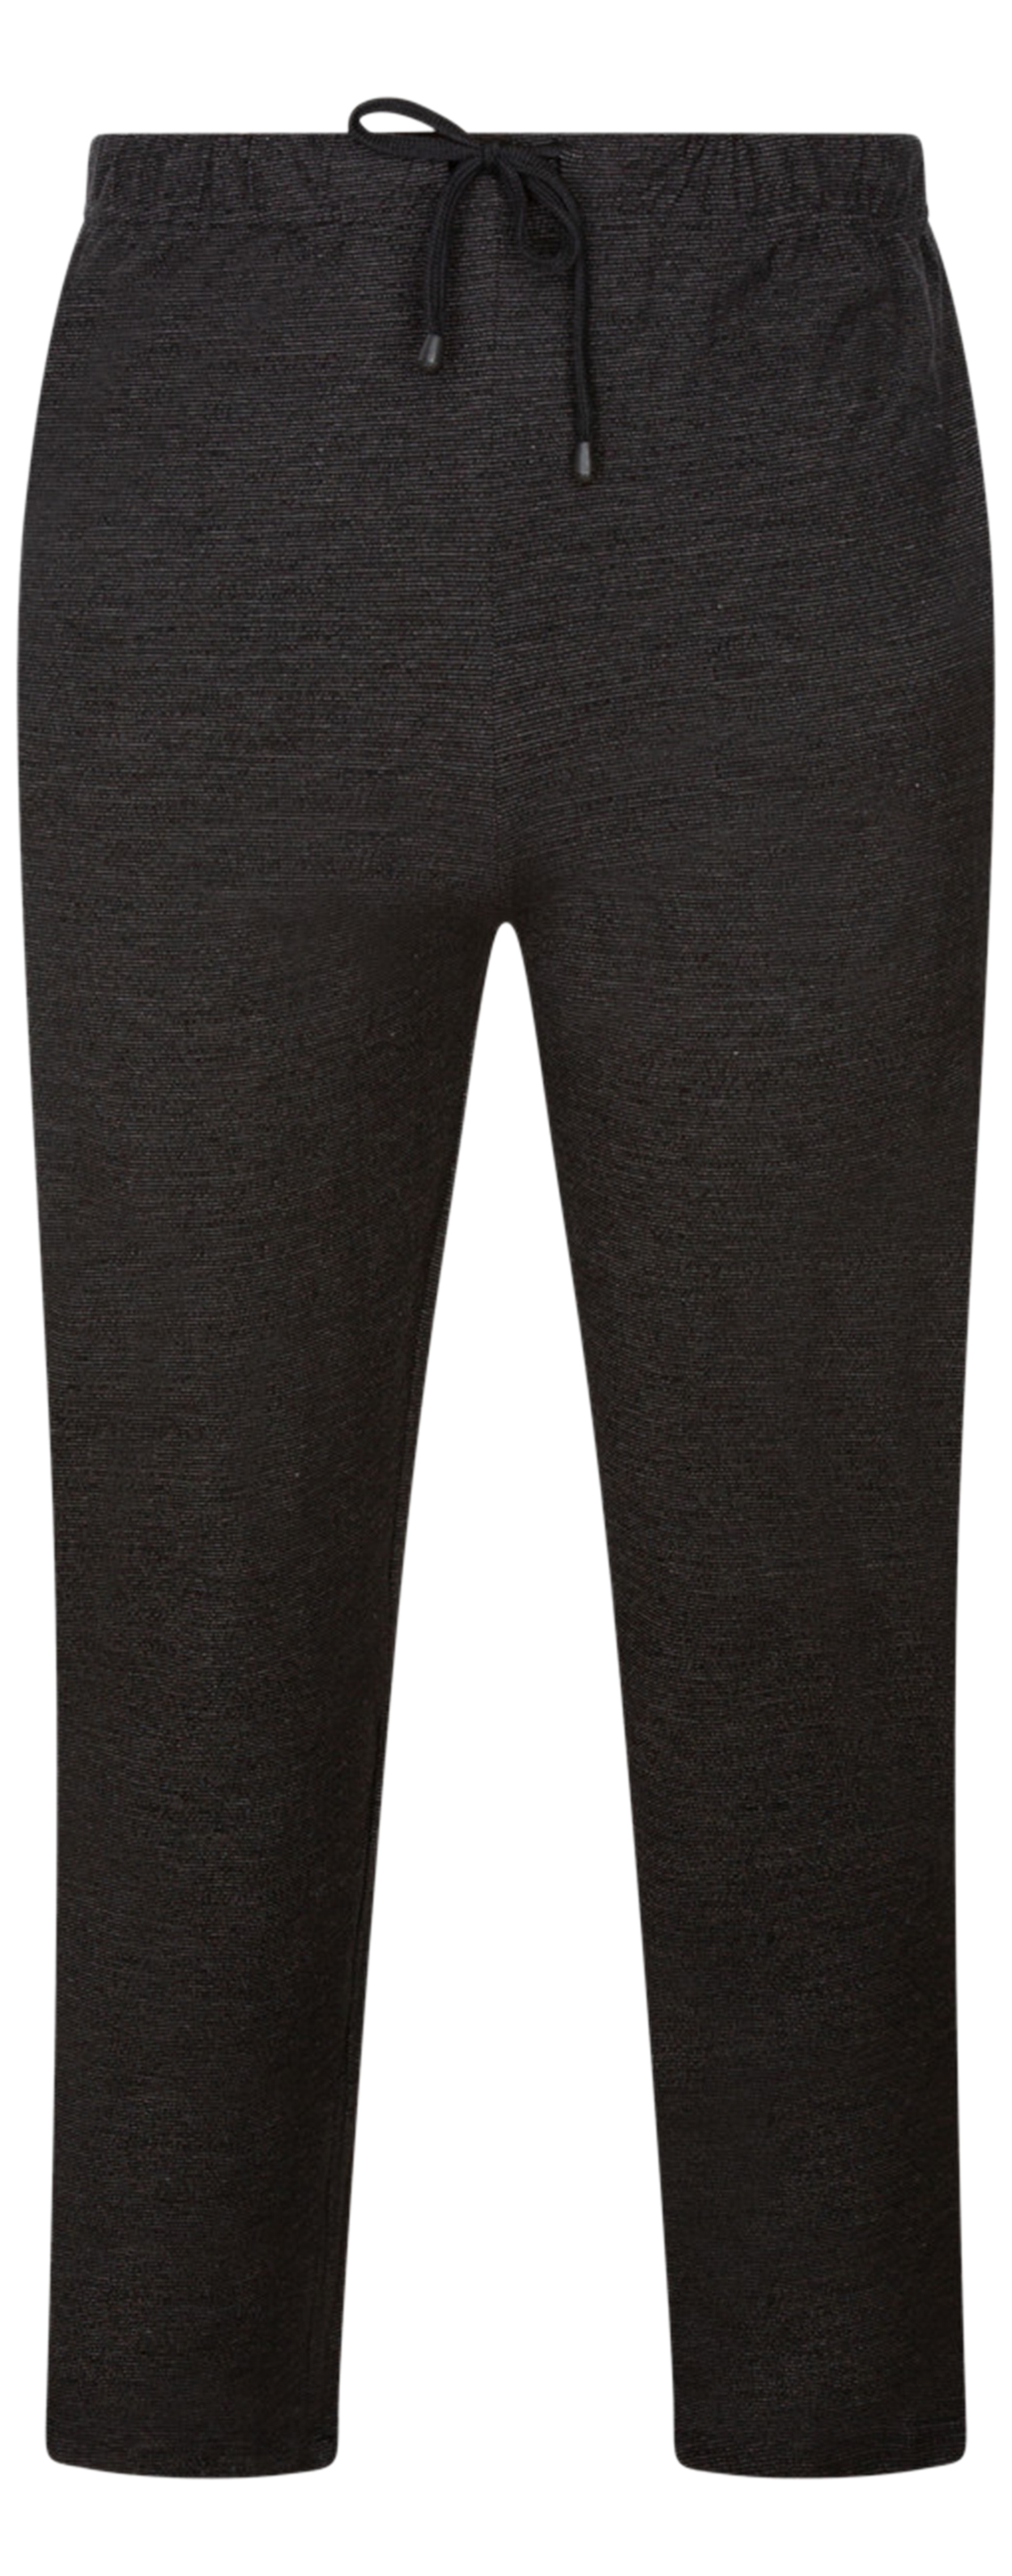 pantalon de pyjama adamo leon en coton rayé noir coupe droite